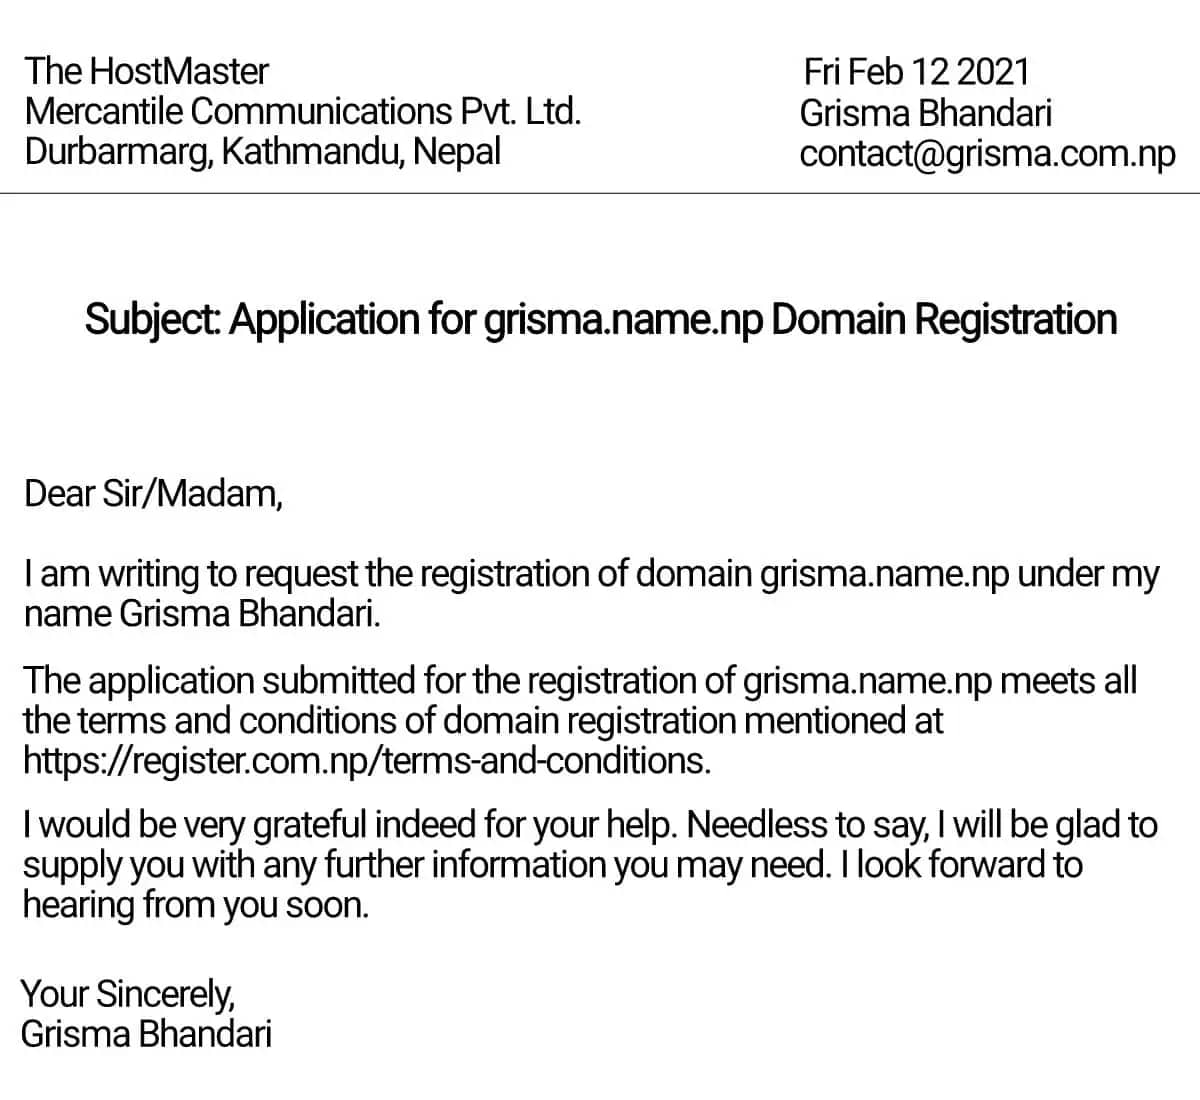 Cover letter for registration of .com.np domain